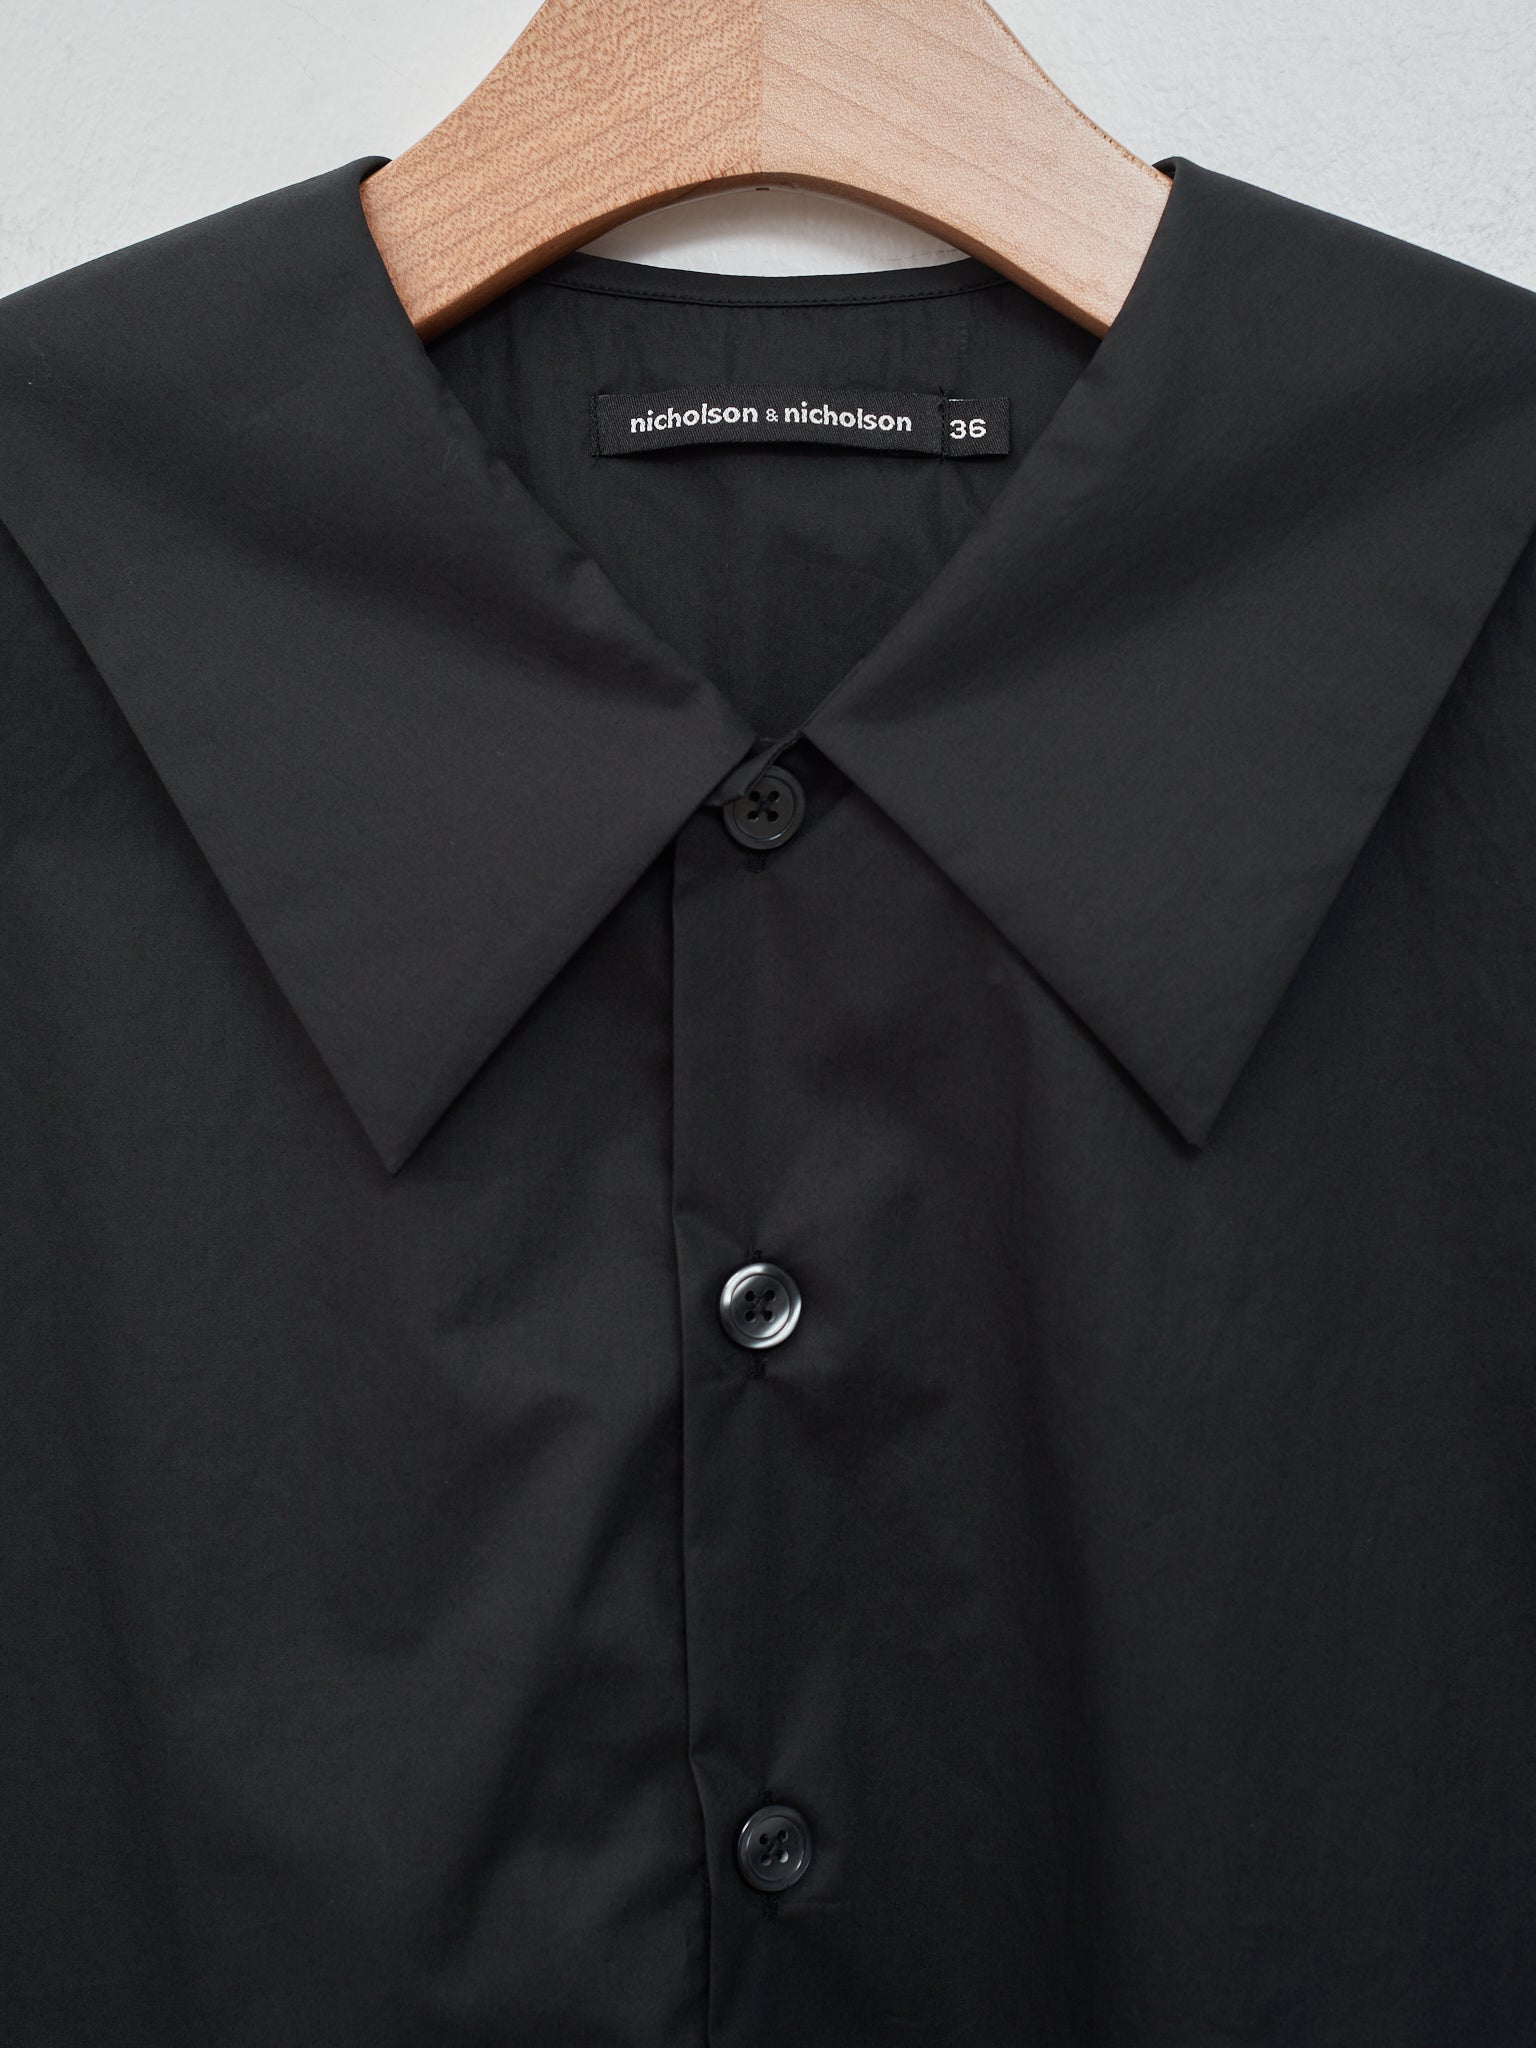 Namu Shop - Nicholson & Nicholson Lala Poplin Shirt - Black